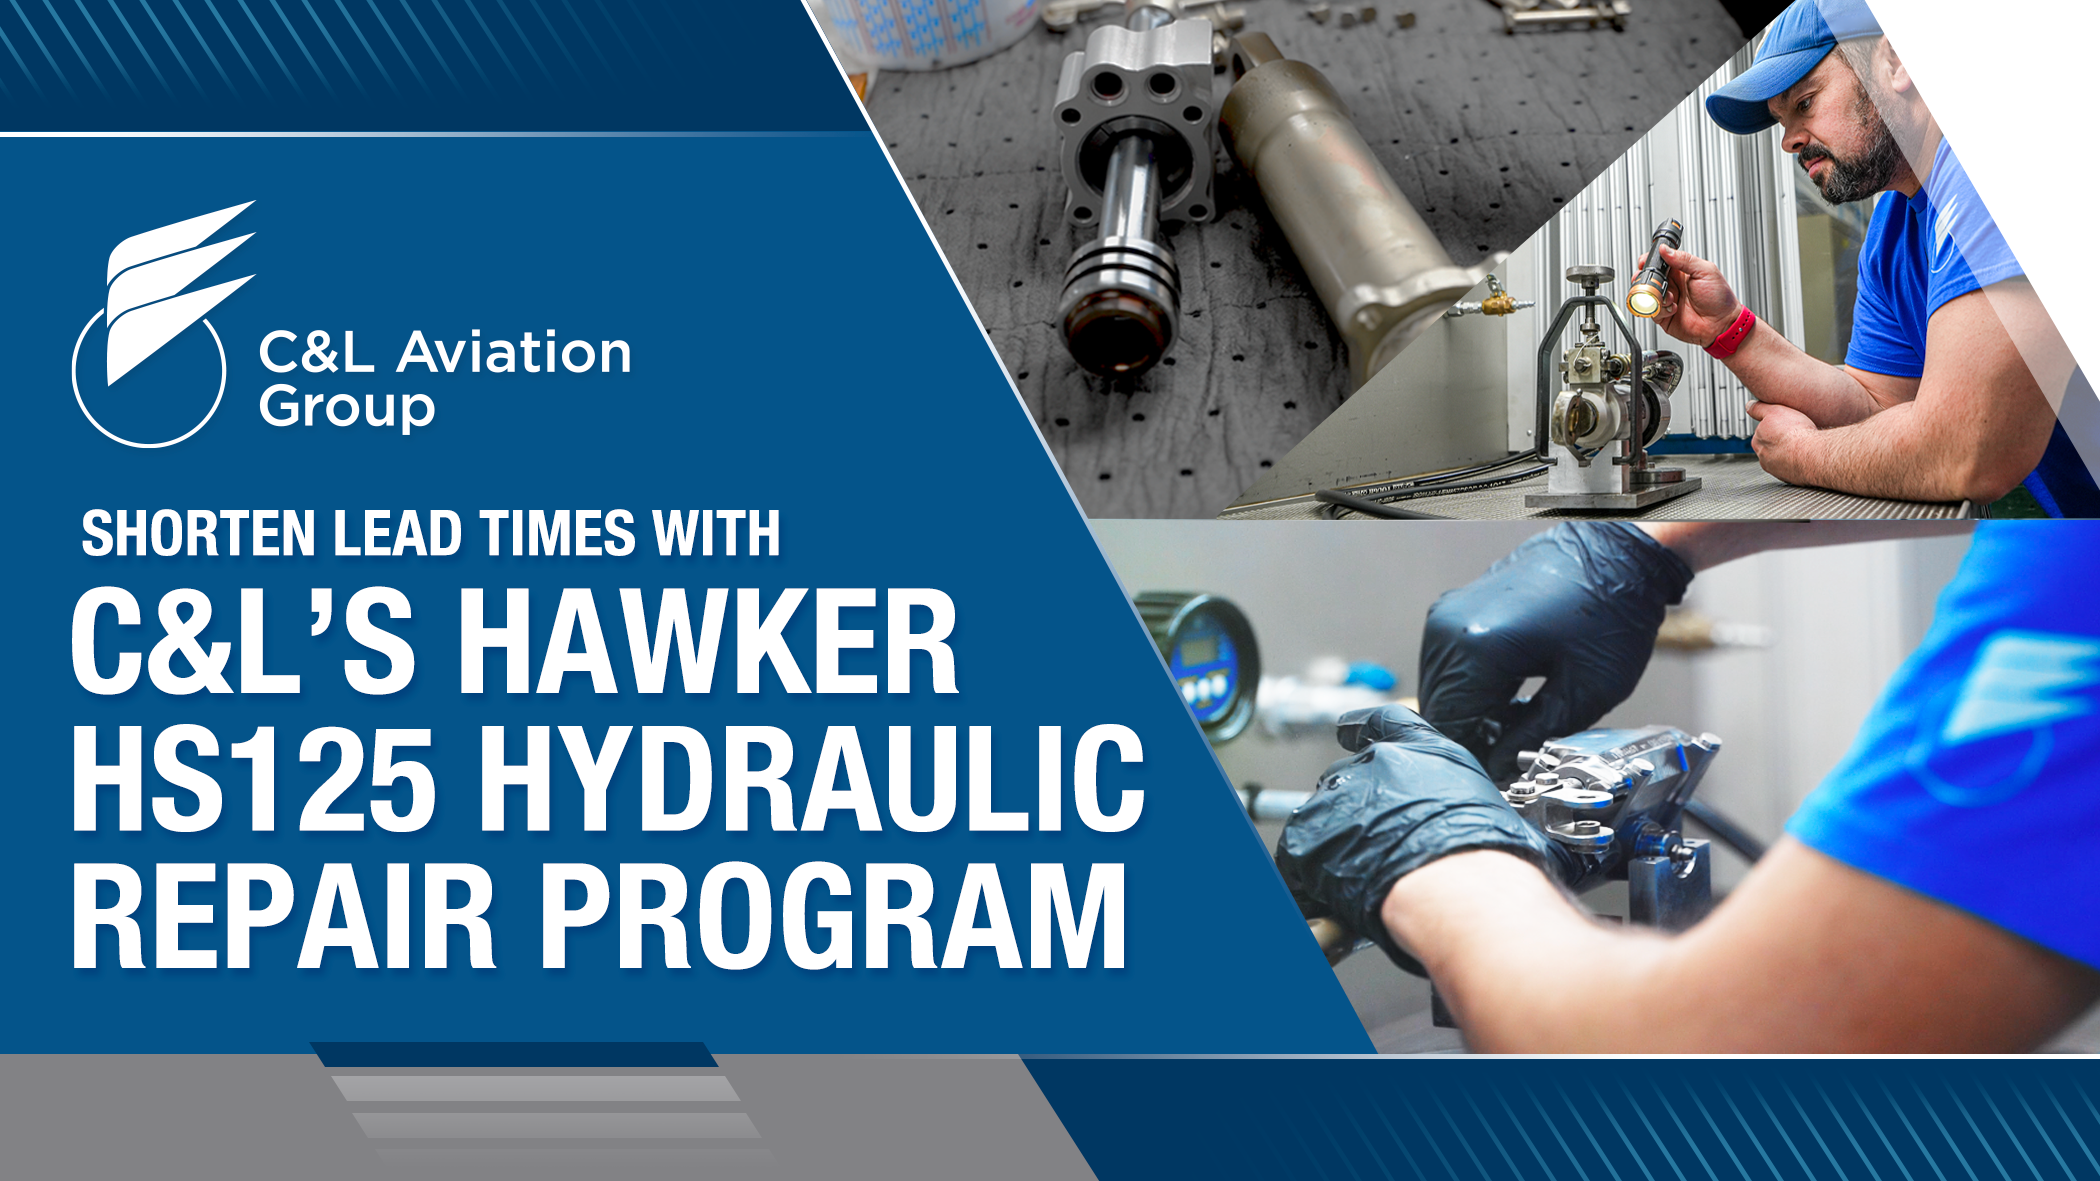 C&L Aviation Group HS125 Hydraulic Repair Program